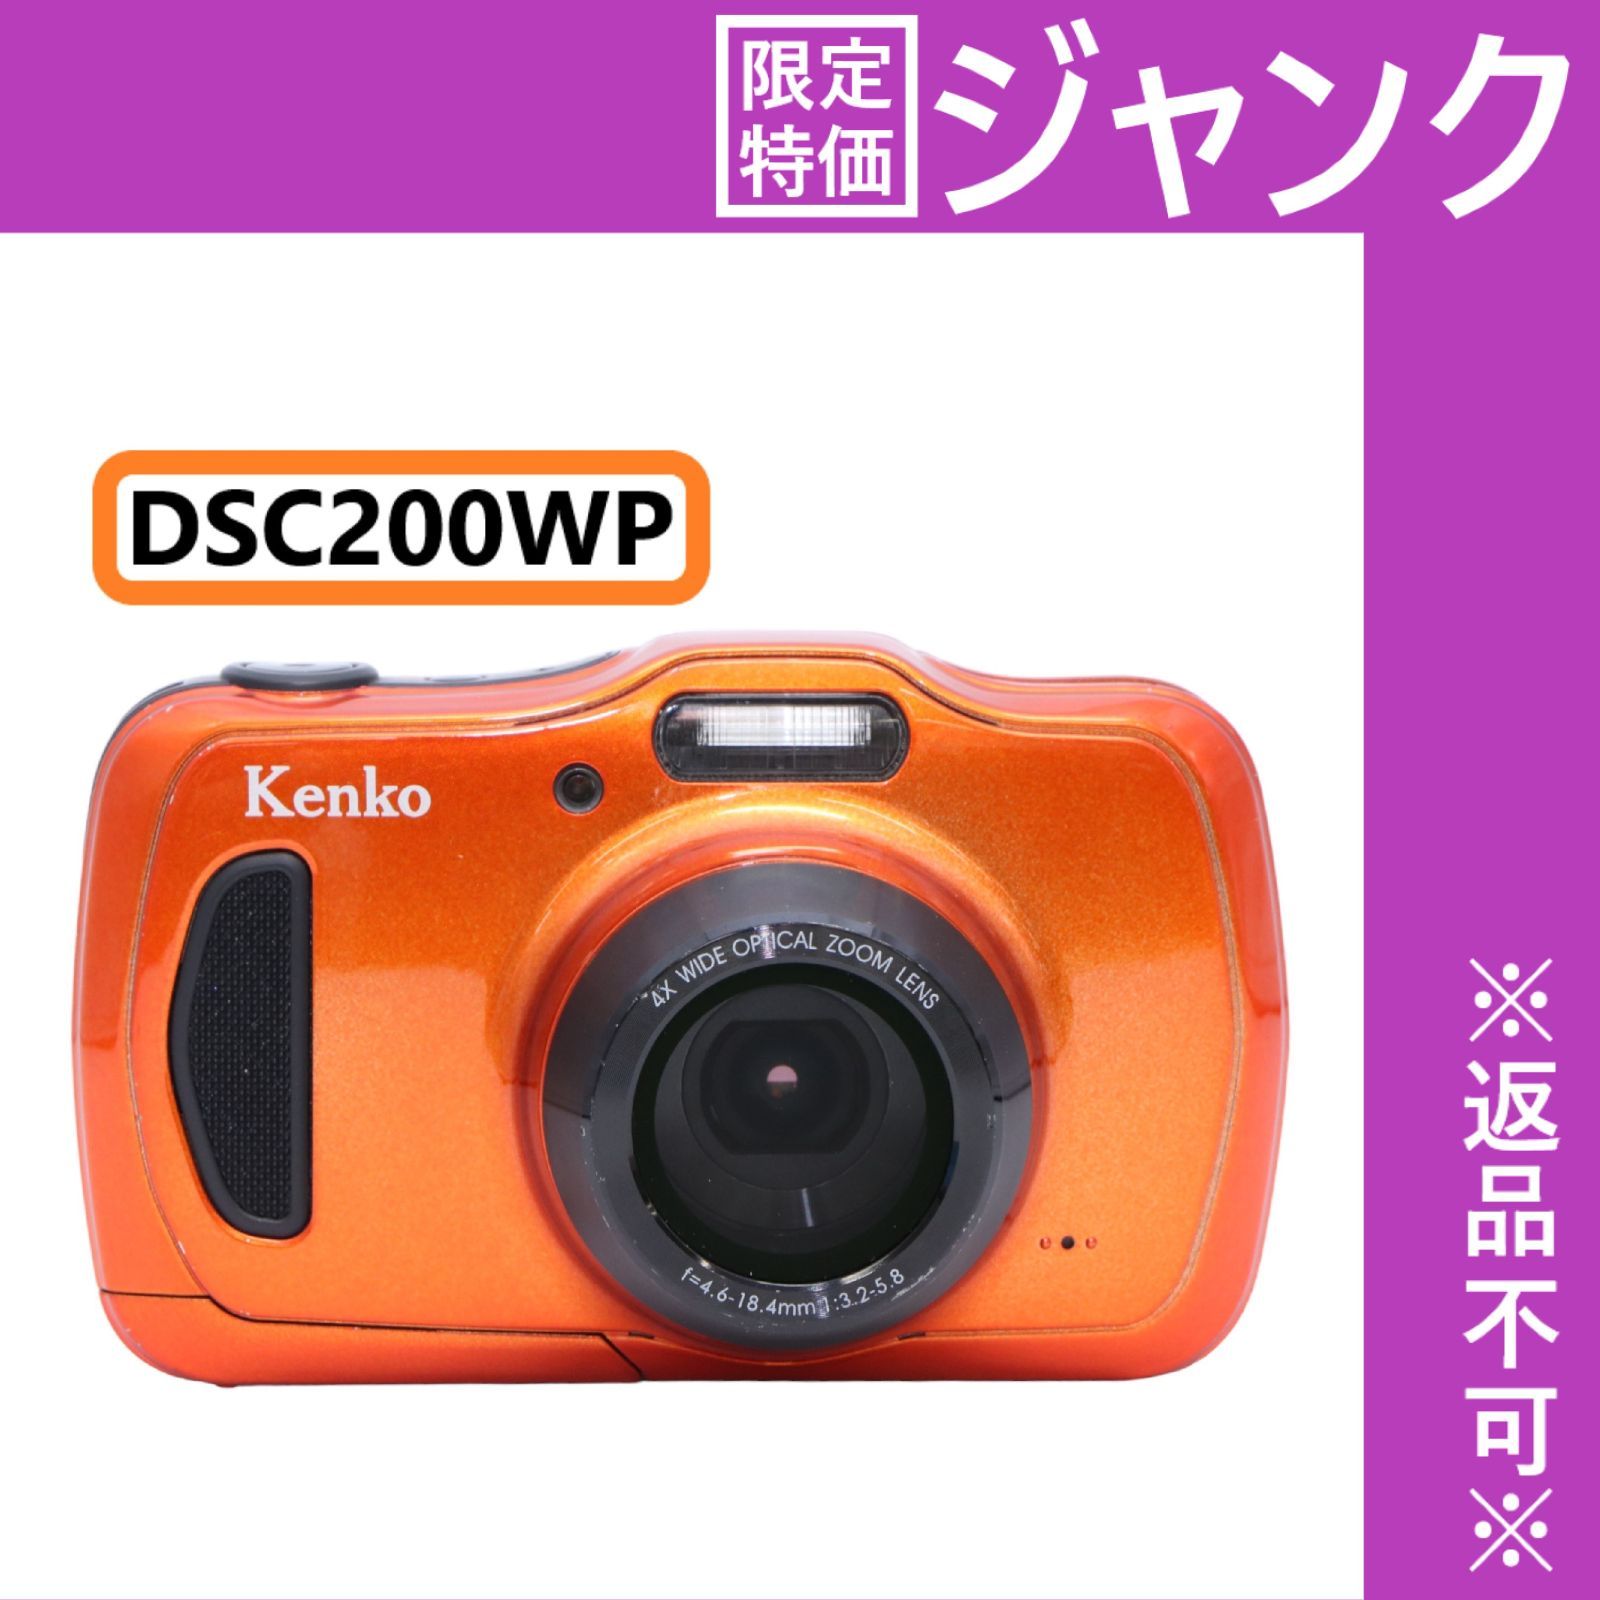 Kenko DSC200WP ケンコー 防水デジタルカメラ - デジタルカメラ